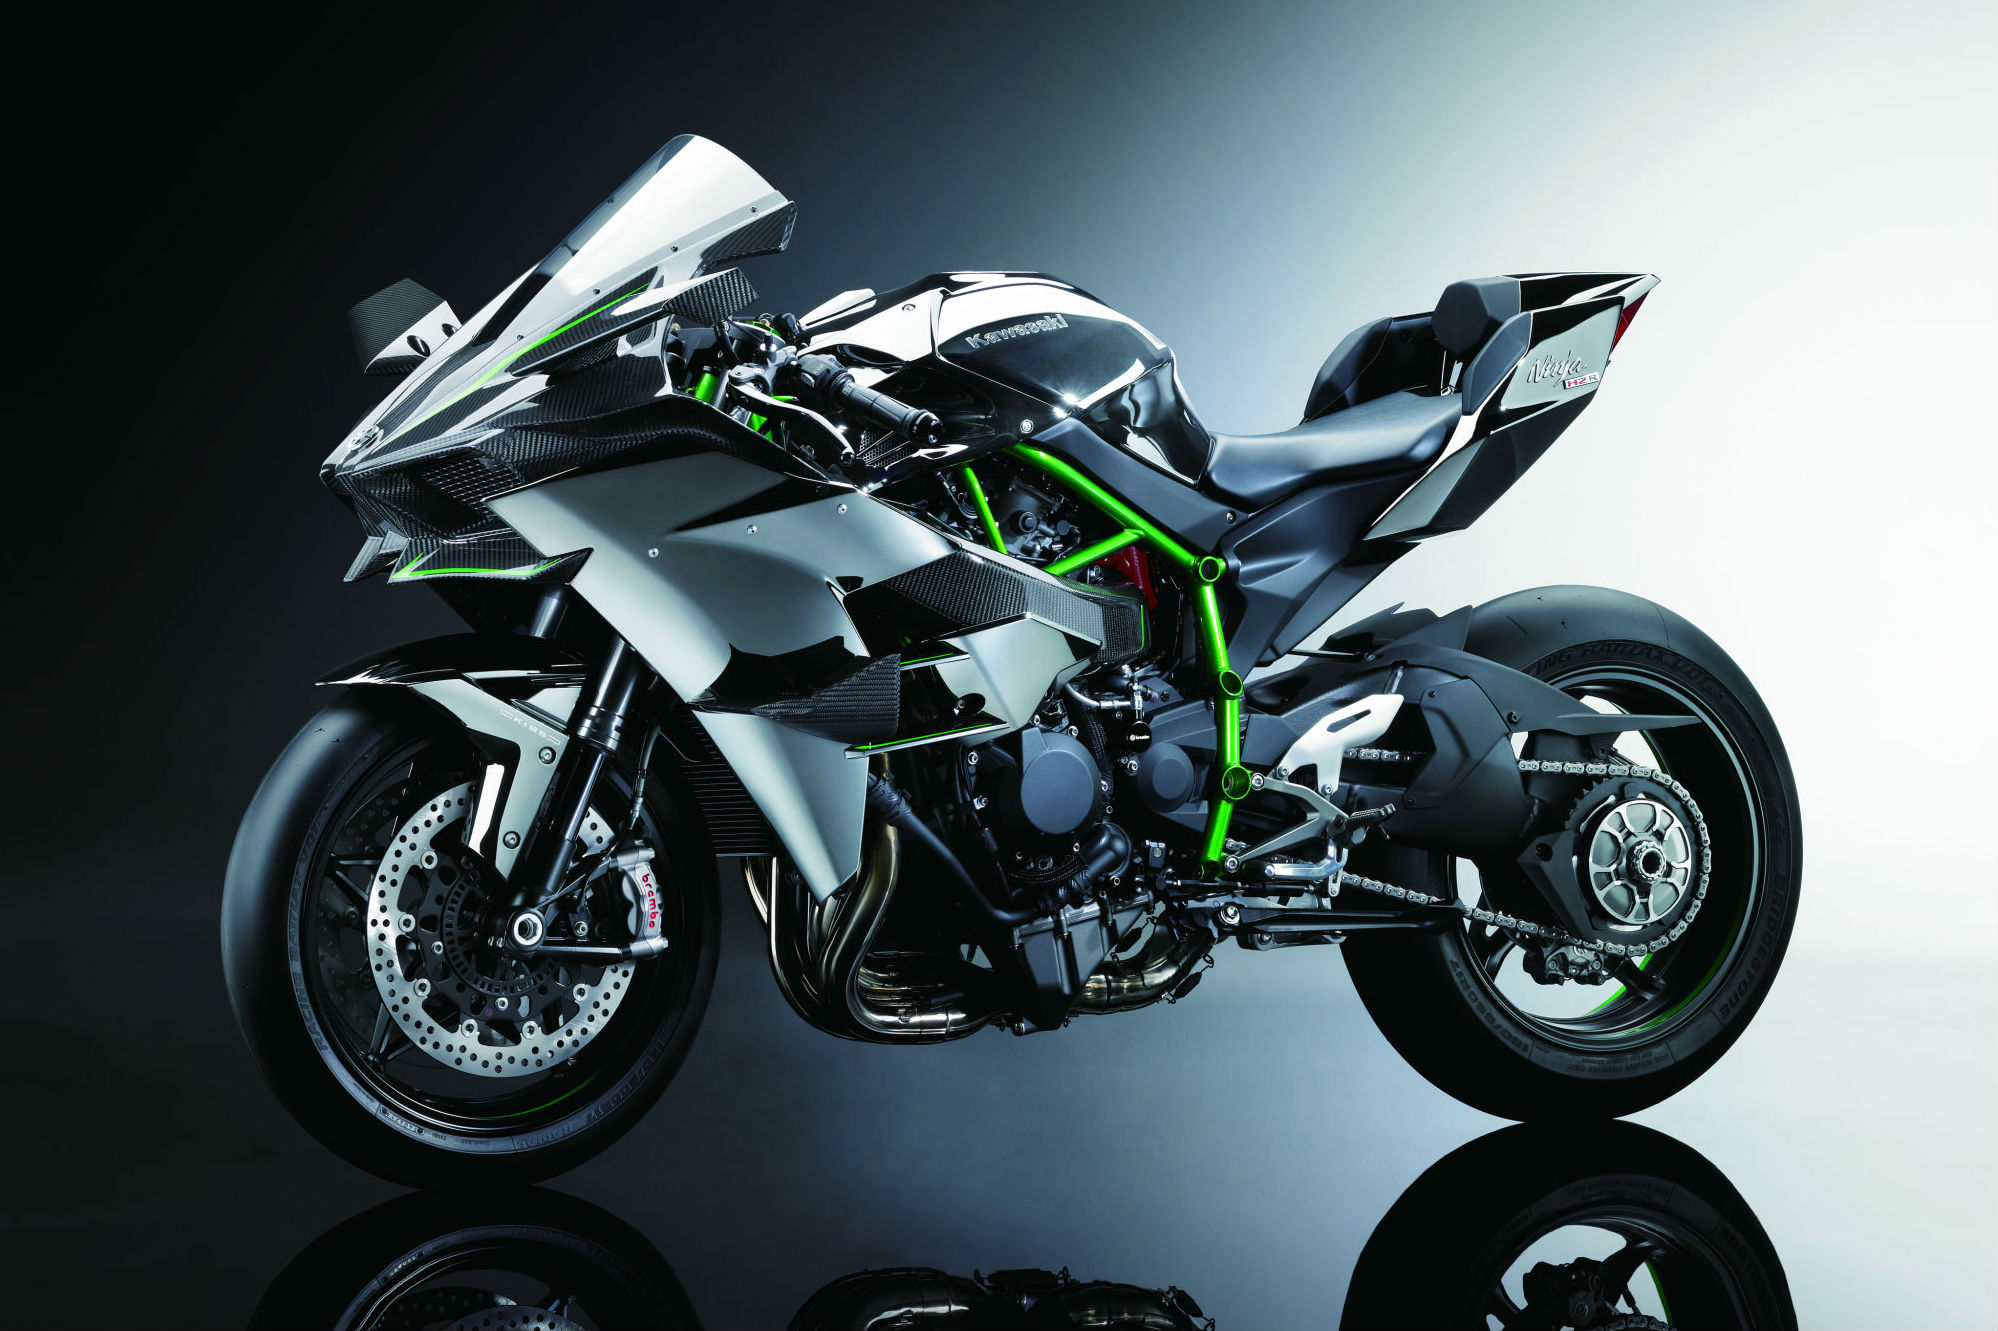 Kawasaki Ninja H2 price announced in US